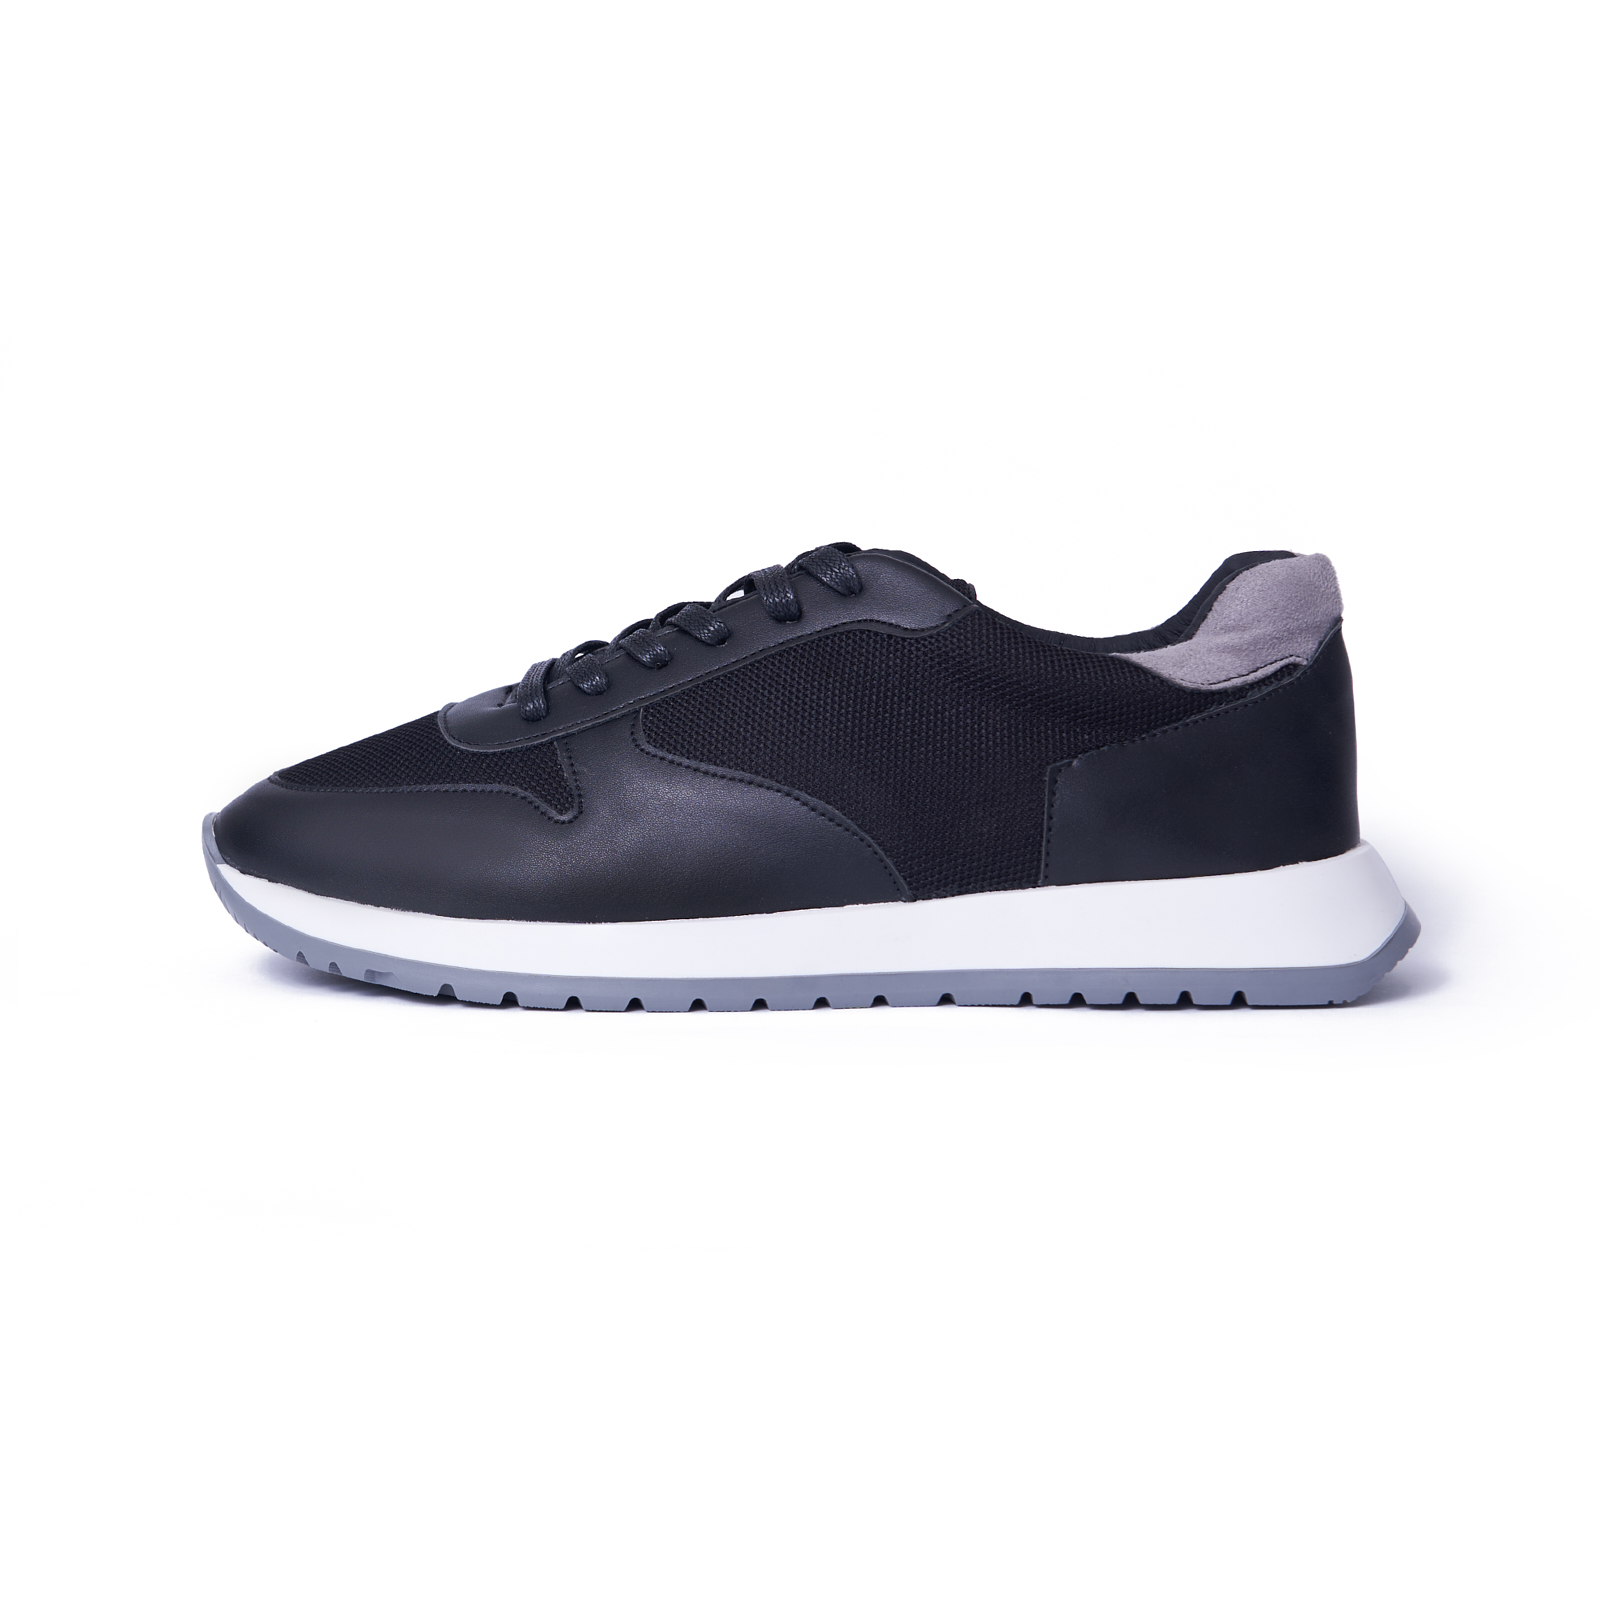 Men's Fashion Sneaker - Black Color | Model R8 | Koka Store Exclusive